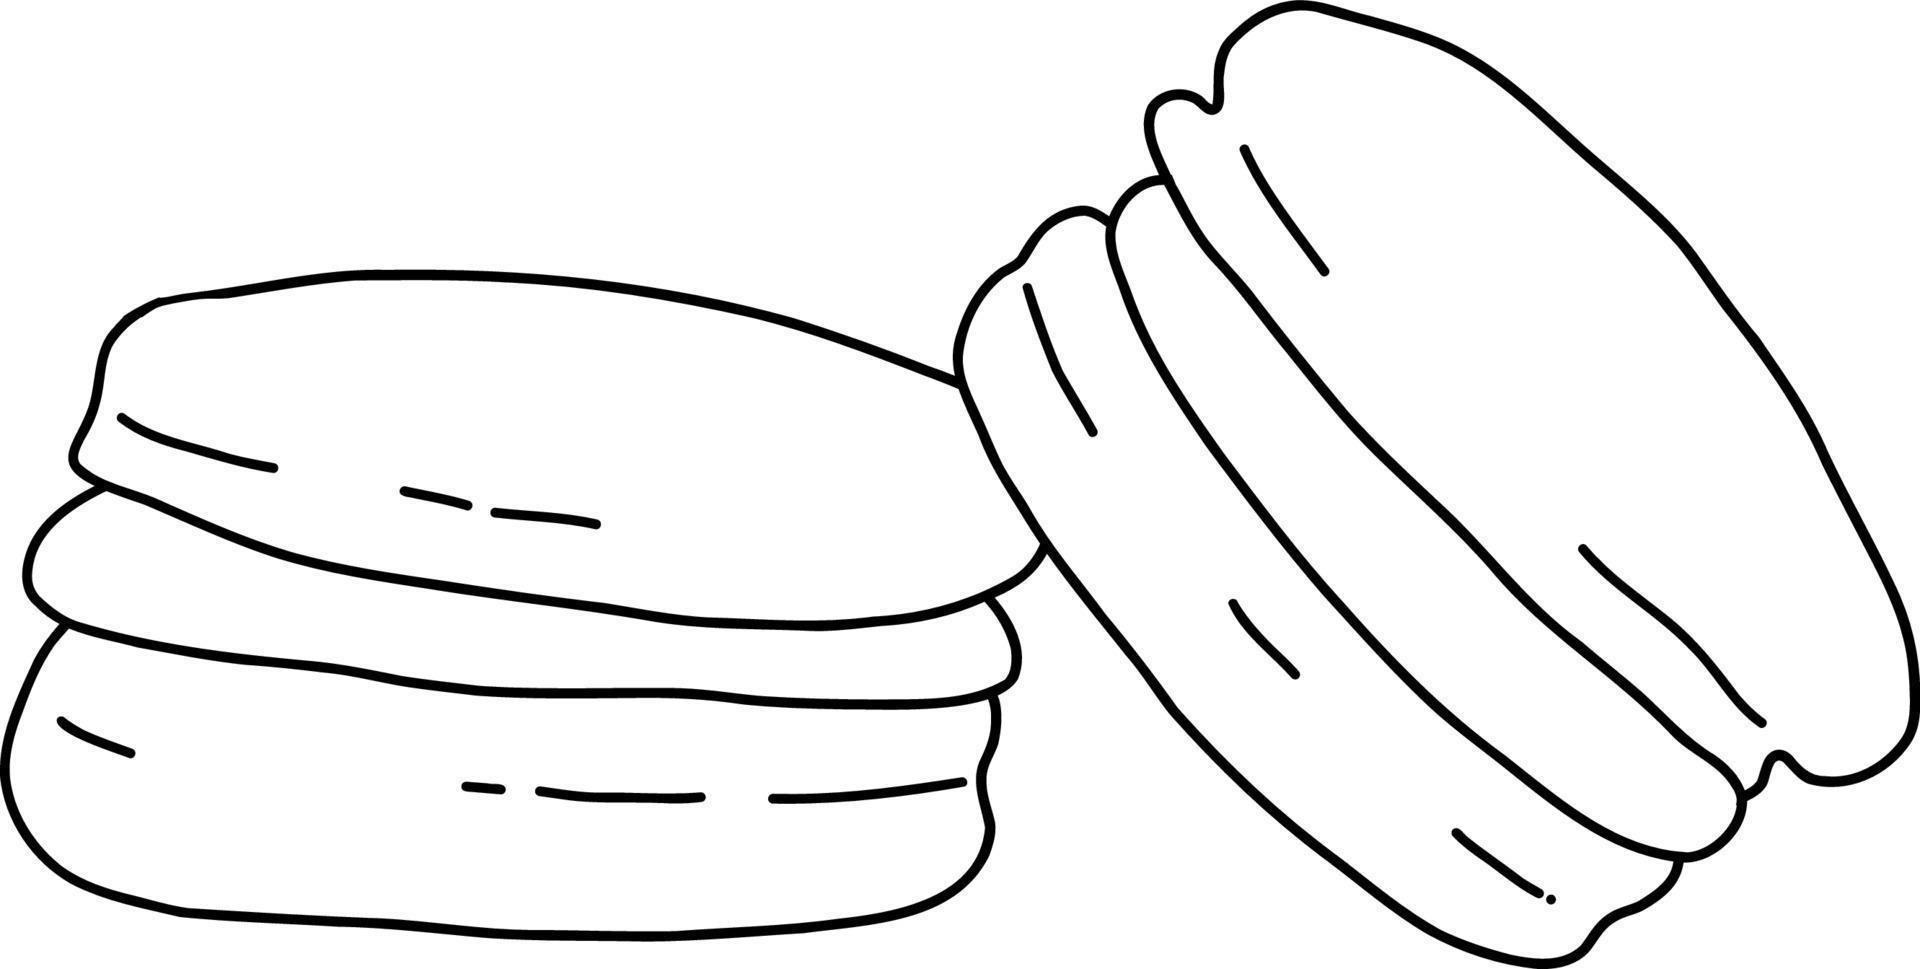 Kekse macarons. Vektor-Illustration vektor